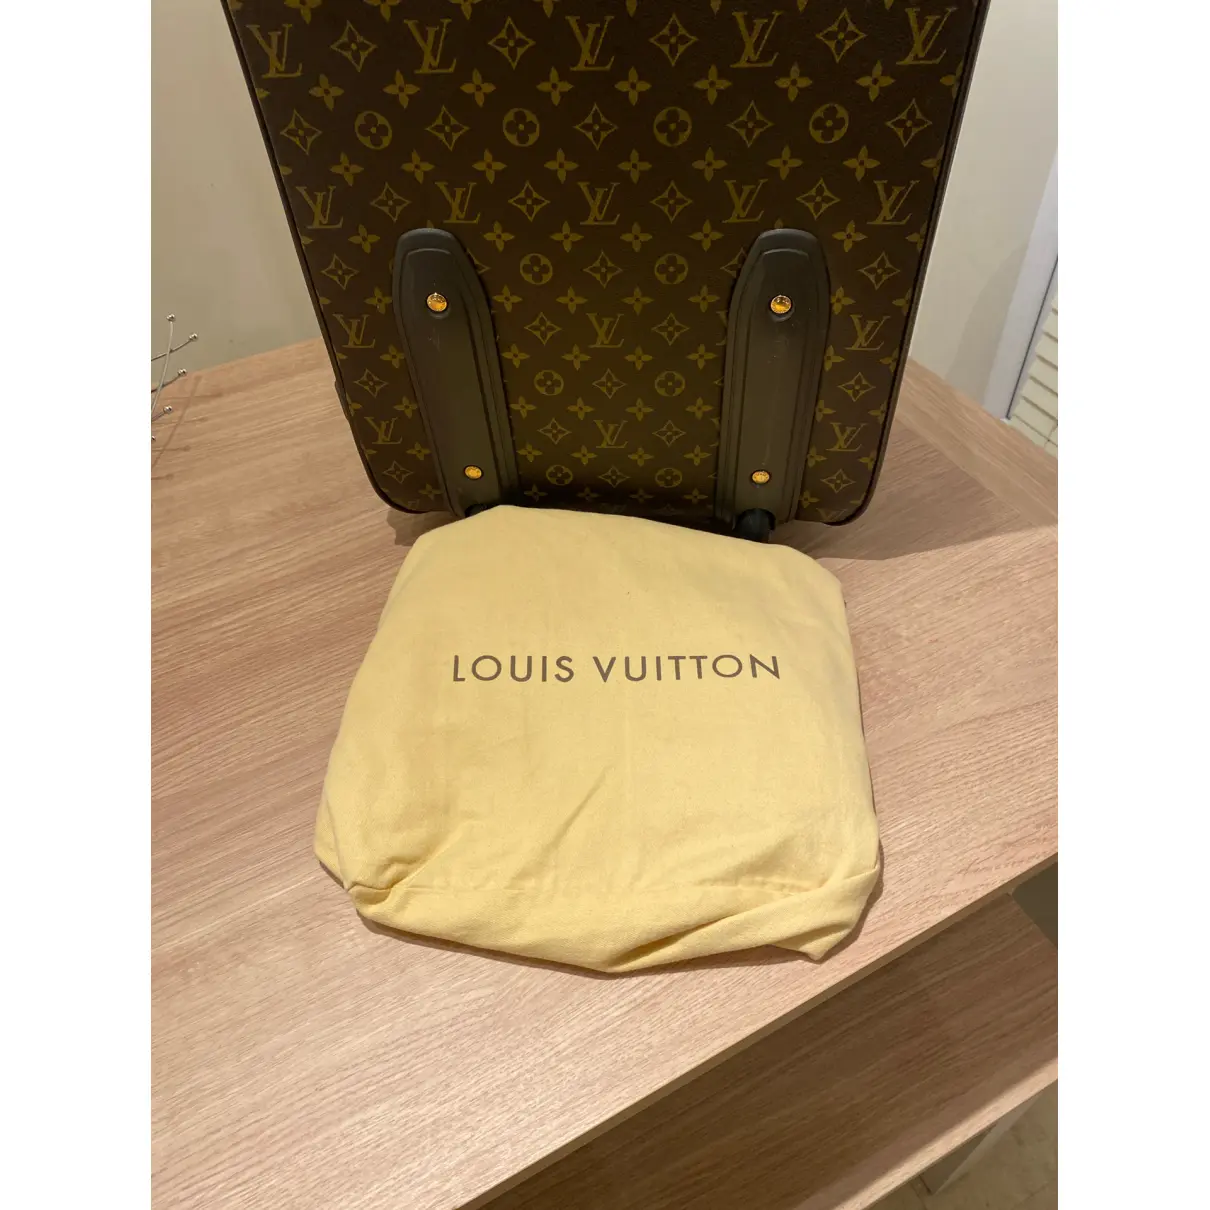 Buy Louis Vuitton Pegase leather travel bag online